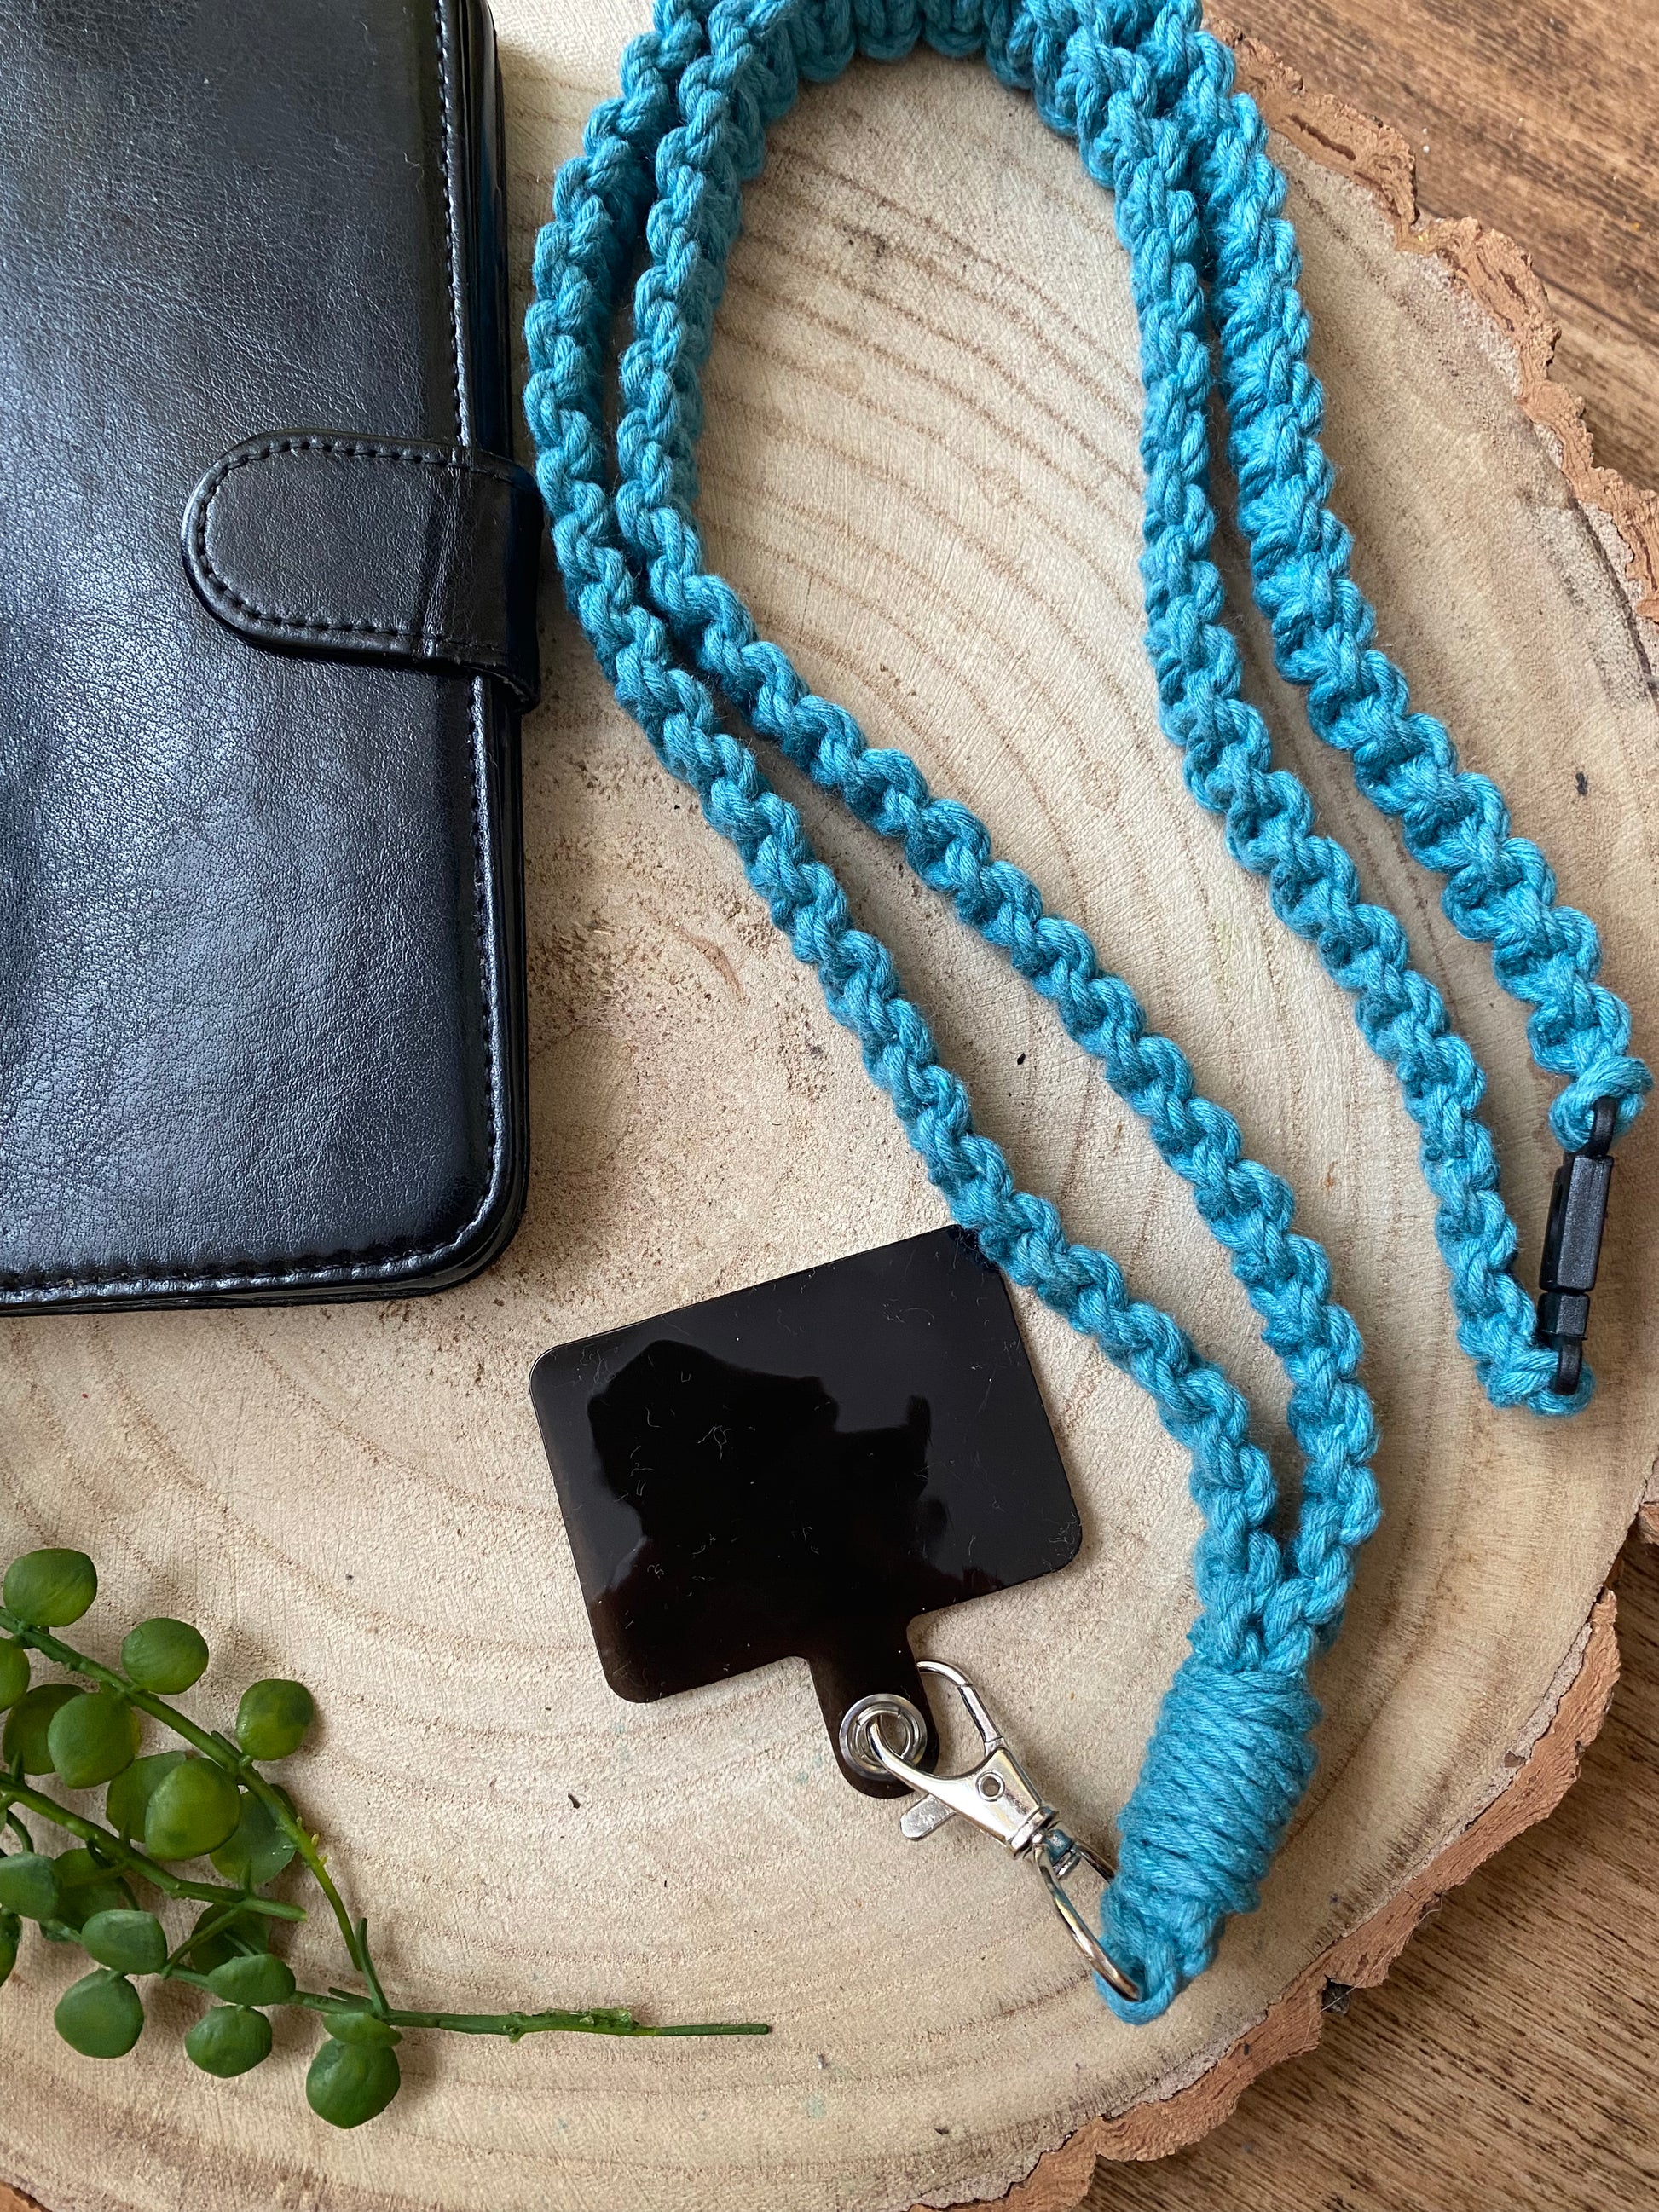 Macrame phone charm, Macrame phone strap for beginners, DIY, Mobile  accessories